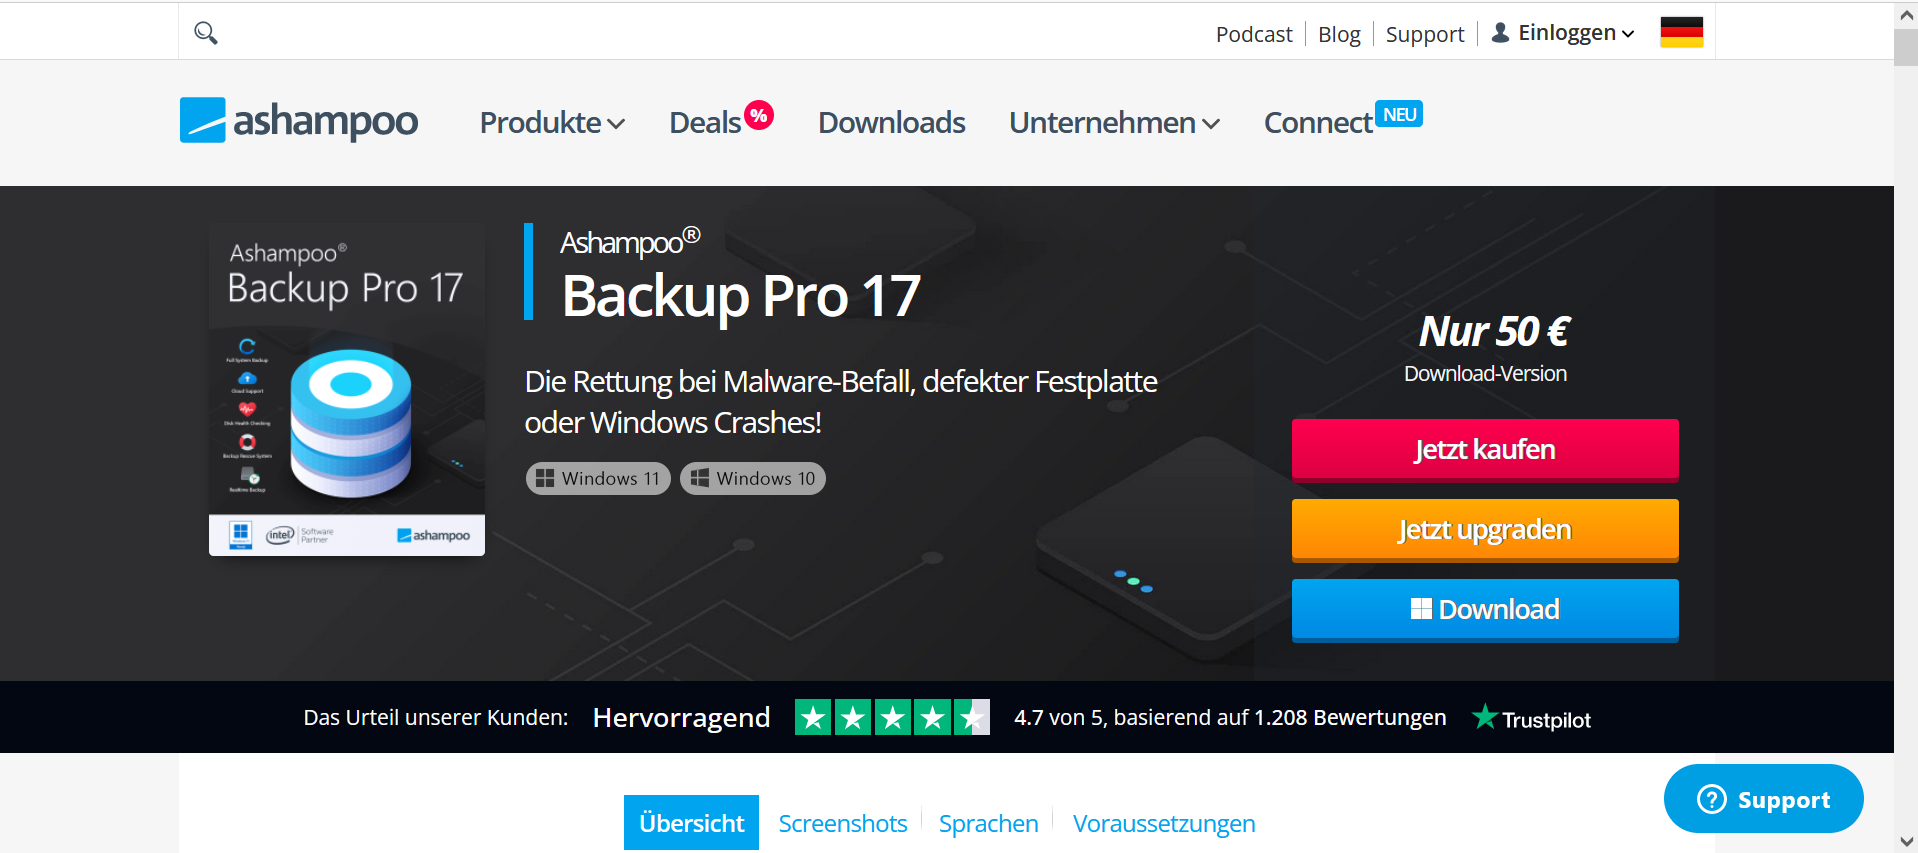 Ashampoo Backup Pro 17 kompatible Cloud-Anbieter